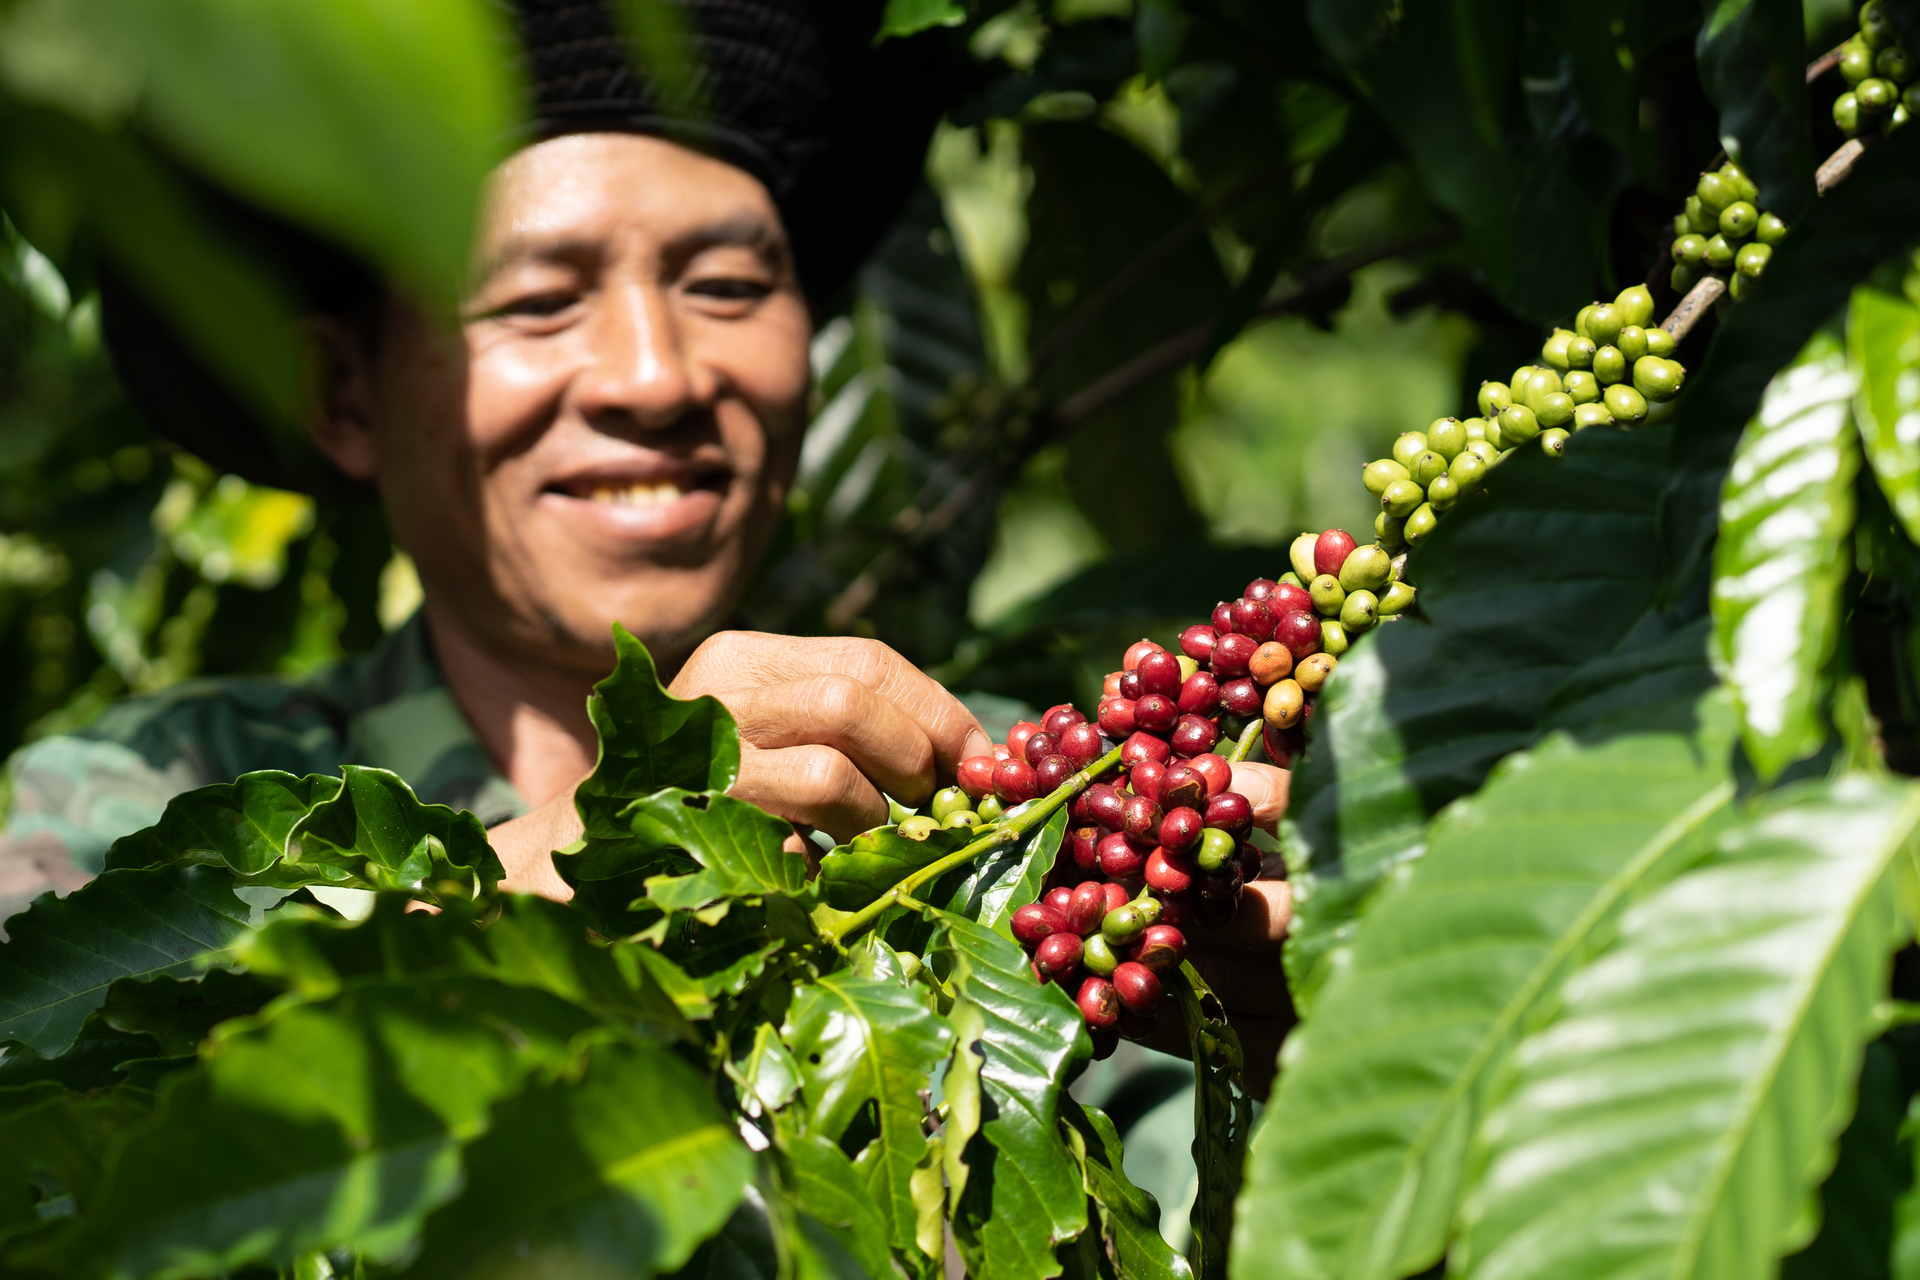 Coffee farmers participating in the Nescafé Plan program produce coffee according to the '4C' criteria.